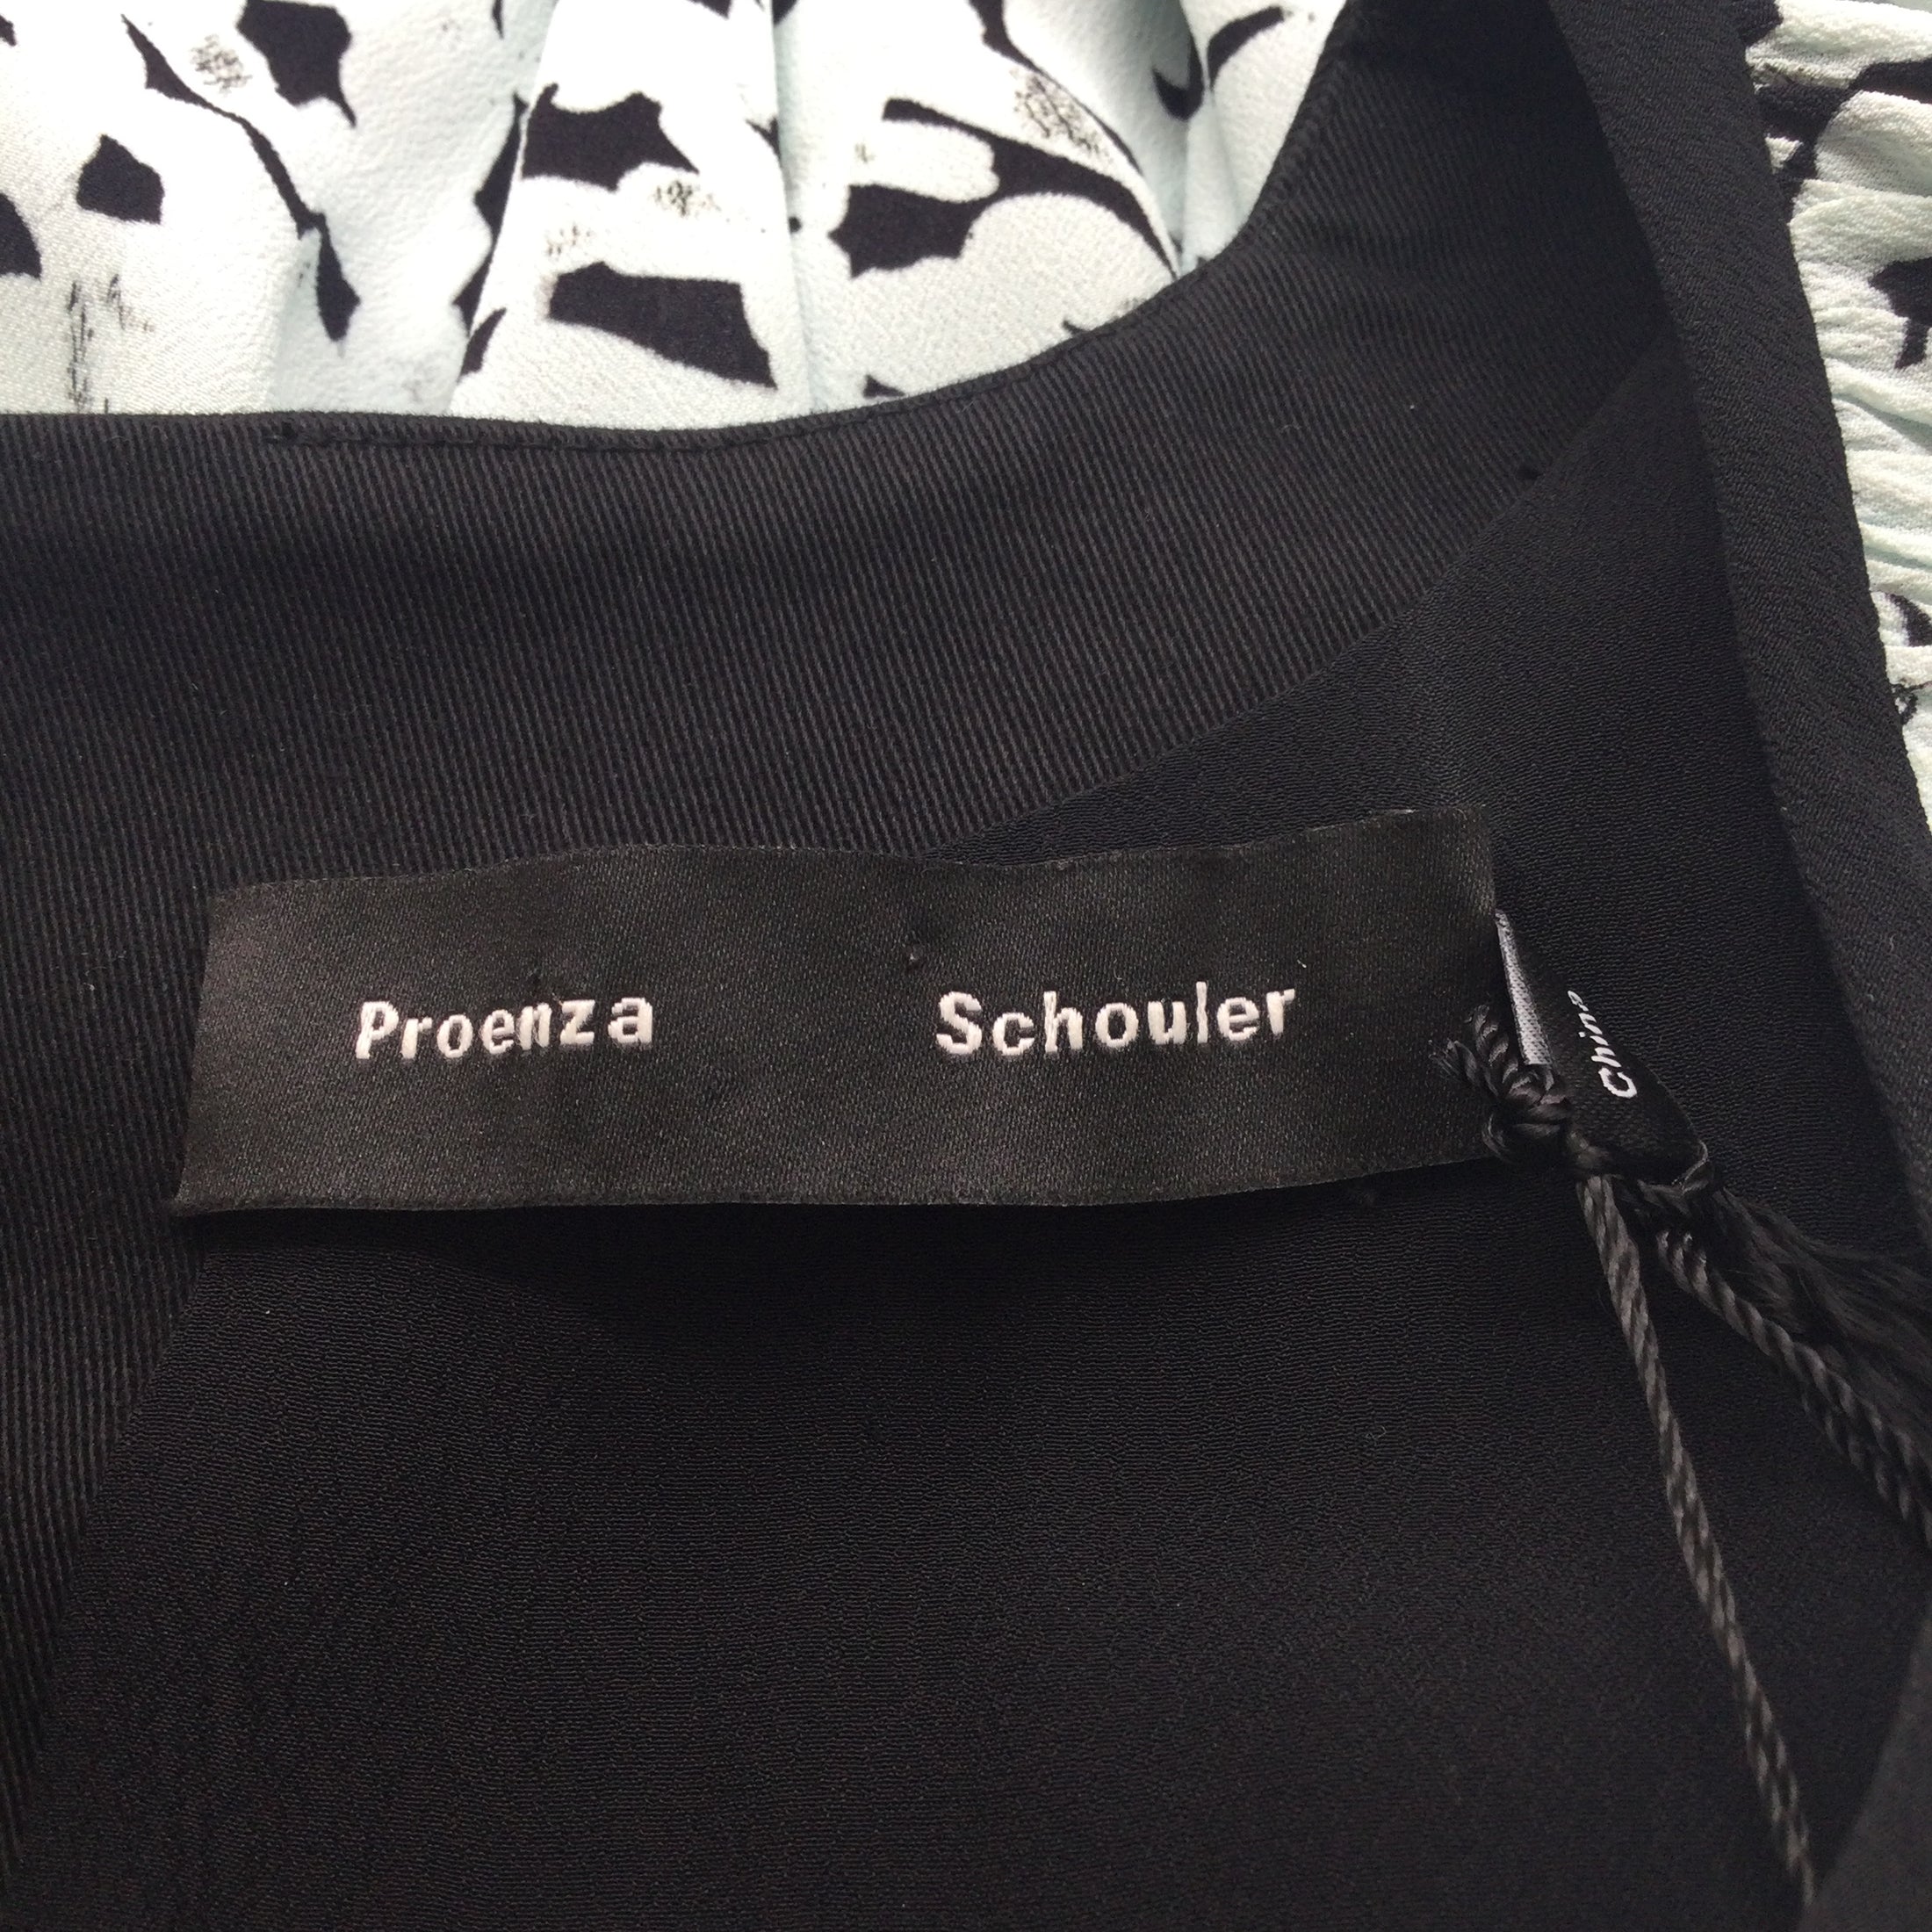 Proenza Schouler Light Blue / Black Short Sleeved Printed Blouse